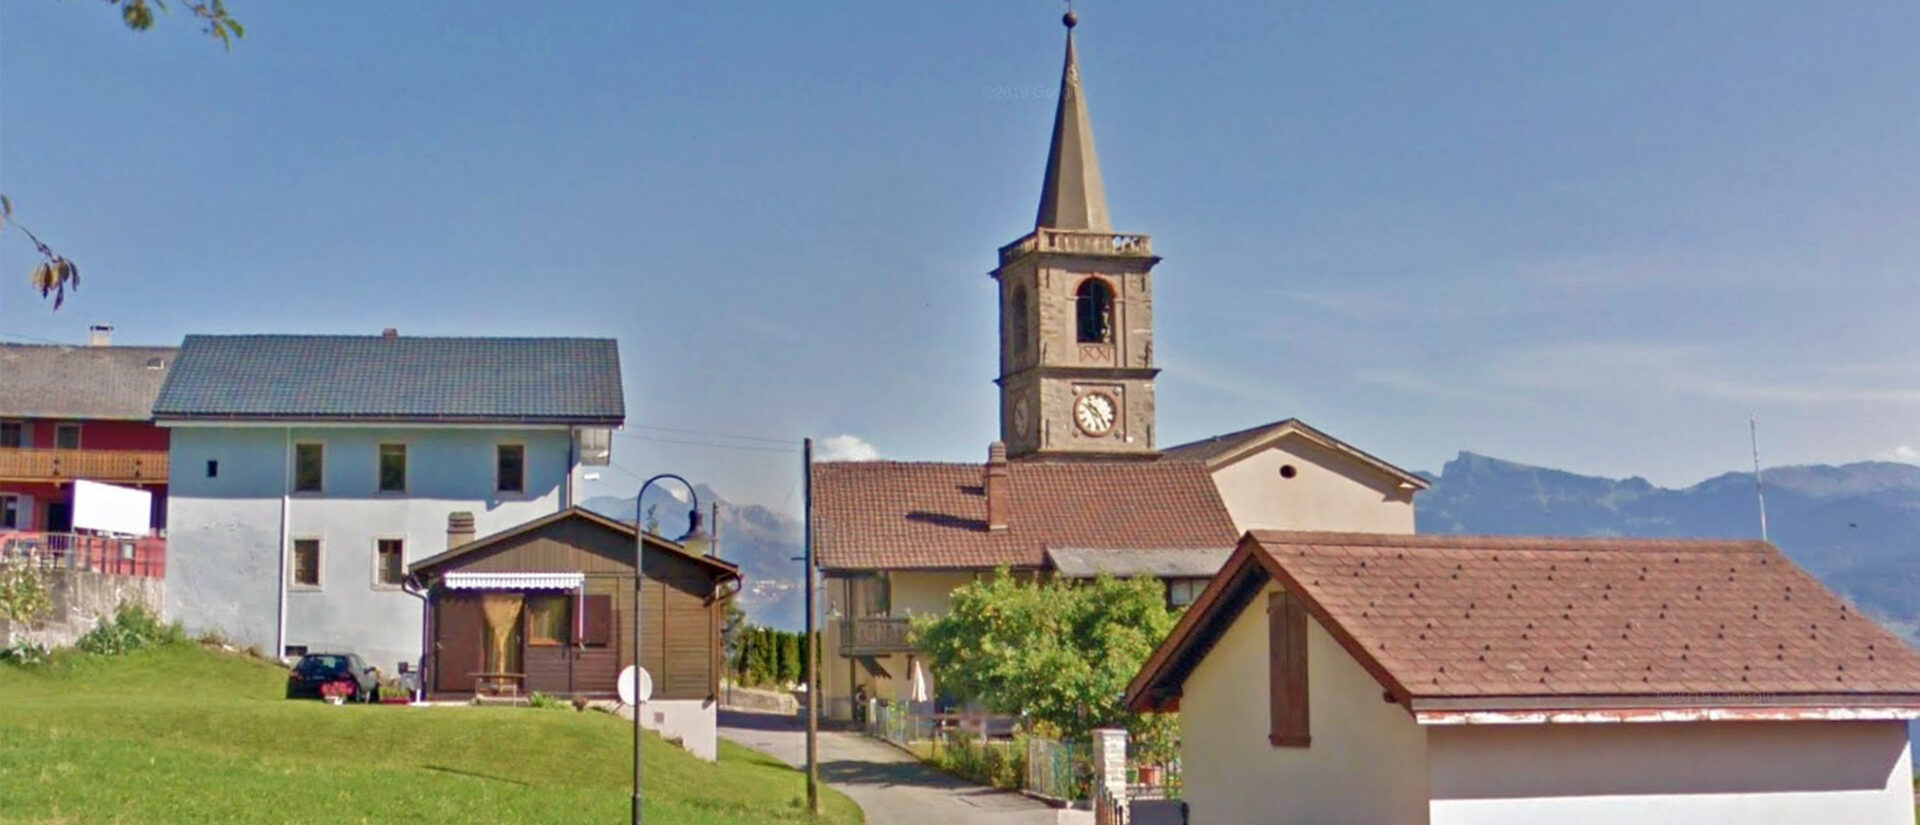 L'église de Vérossaz, en Valais | © Grégory Roth